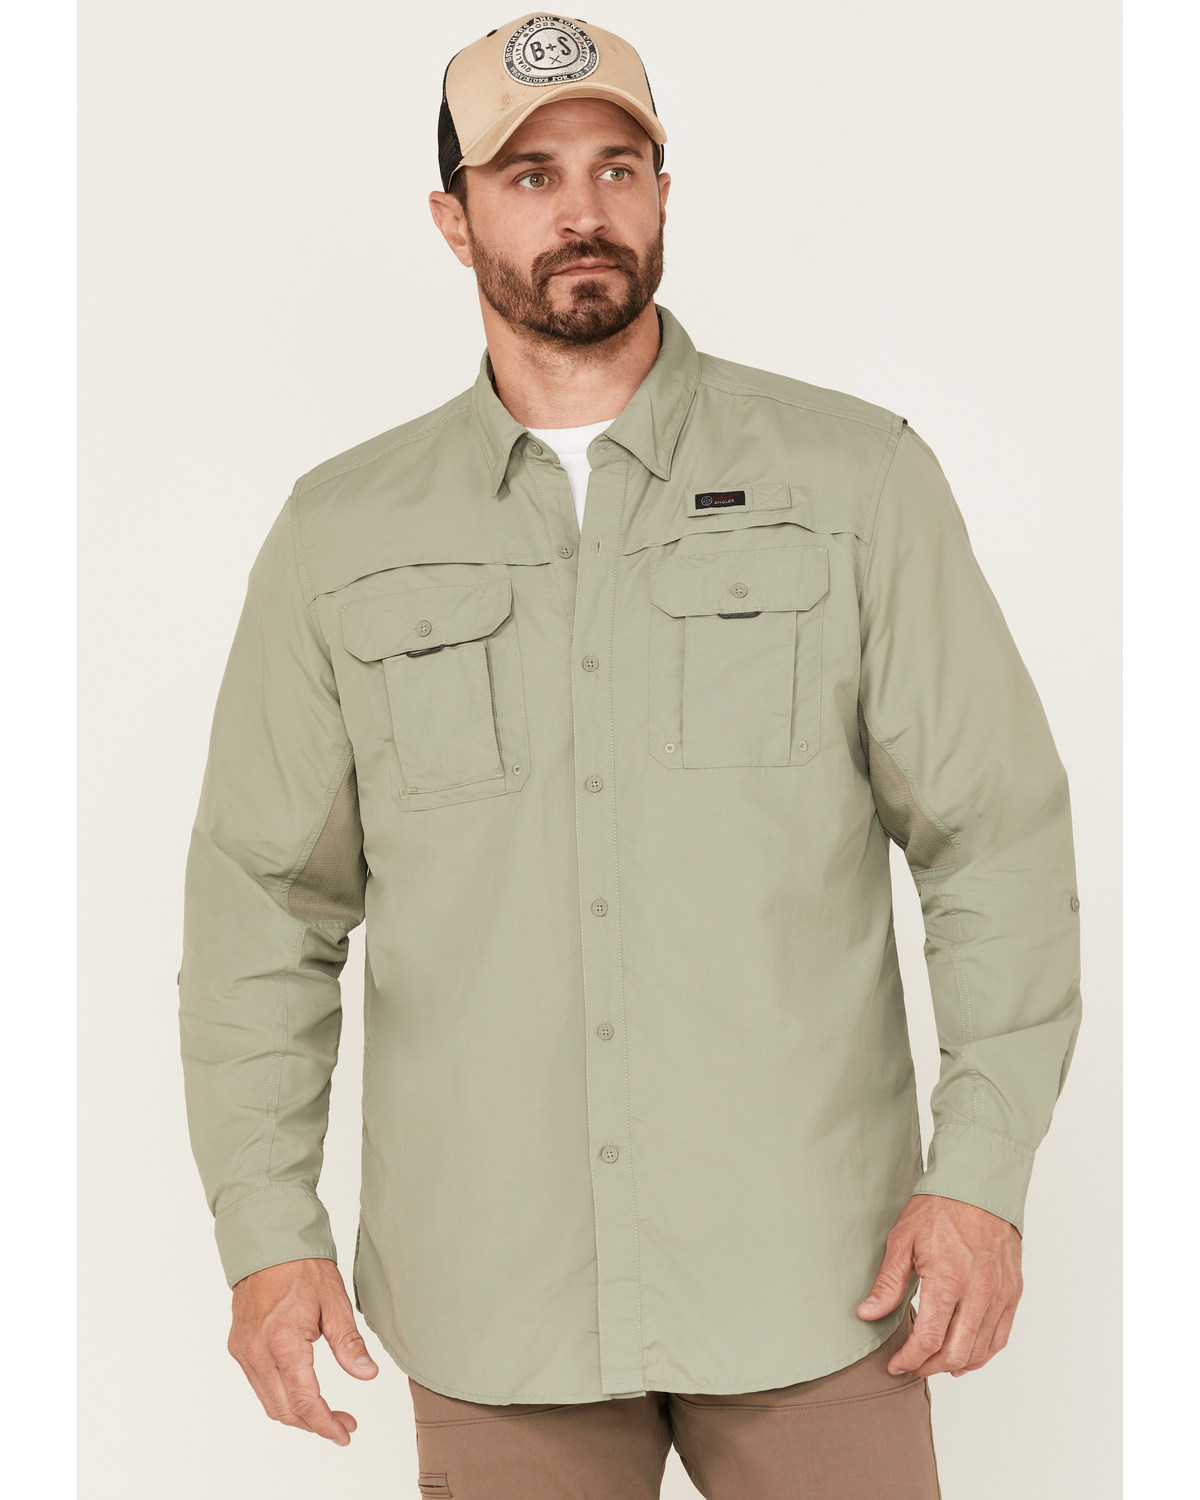 ATG by Wrangler Men's All-Terrain Angler Button Down Western Shirt